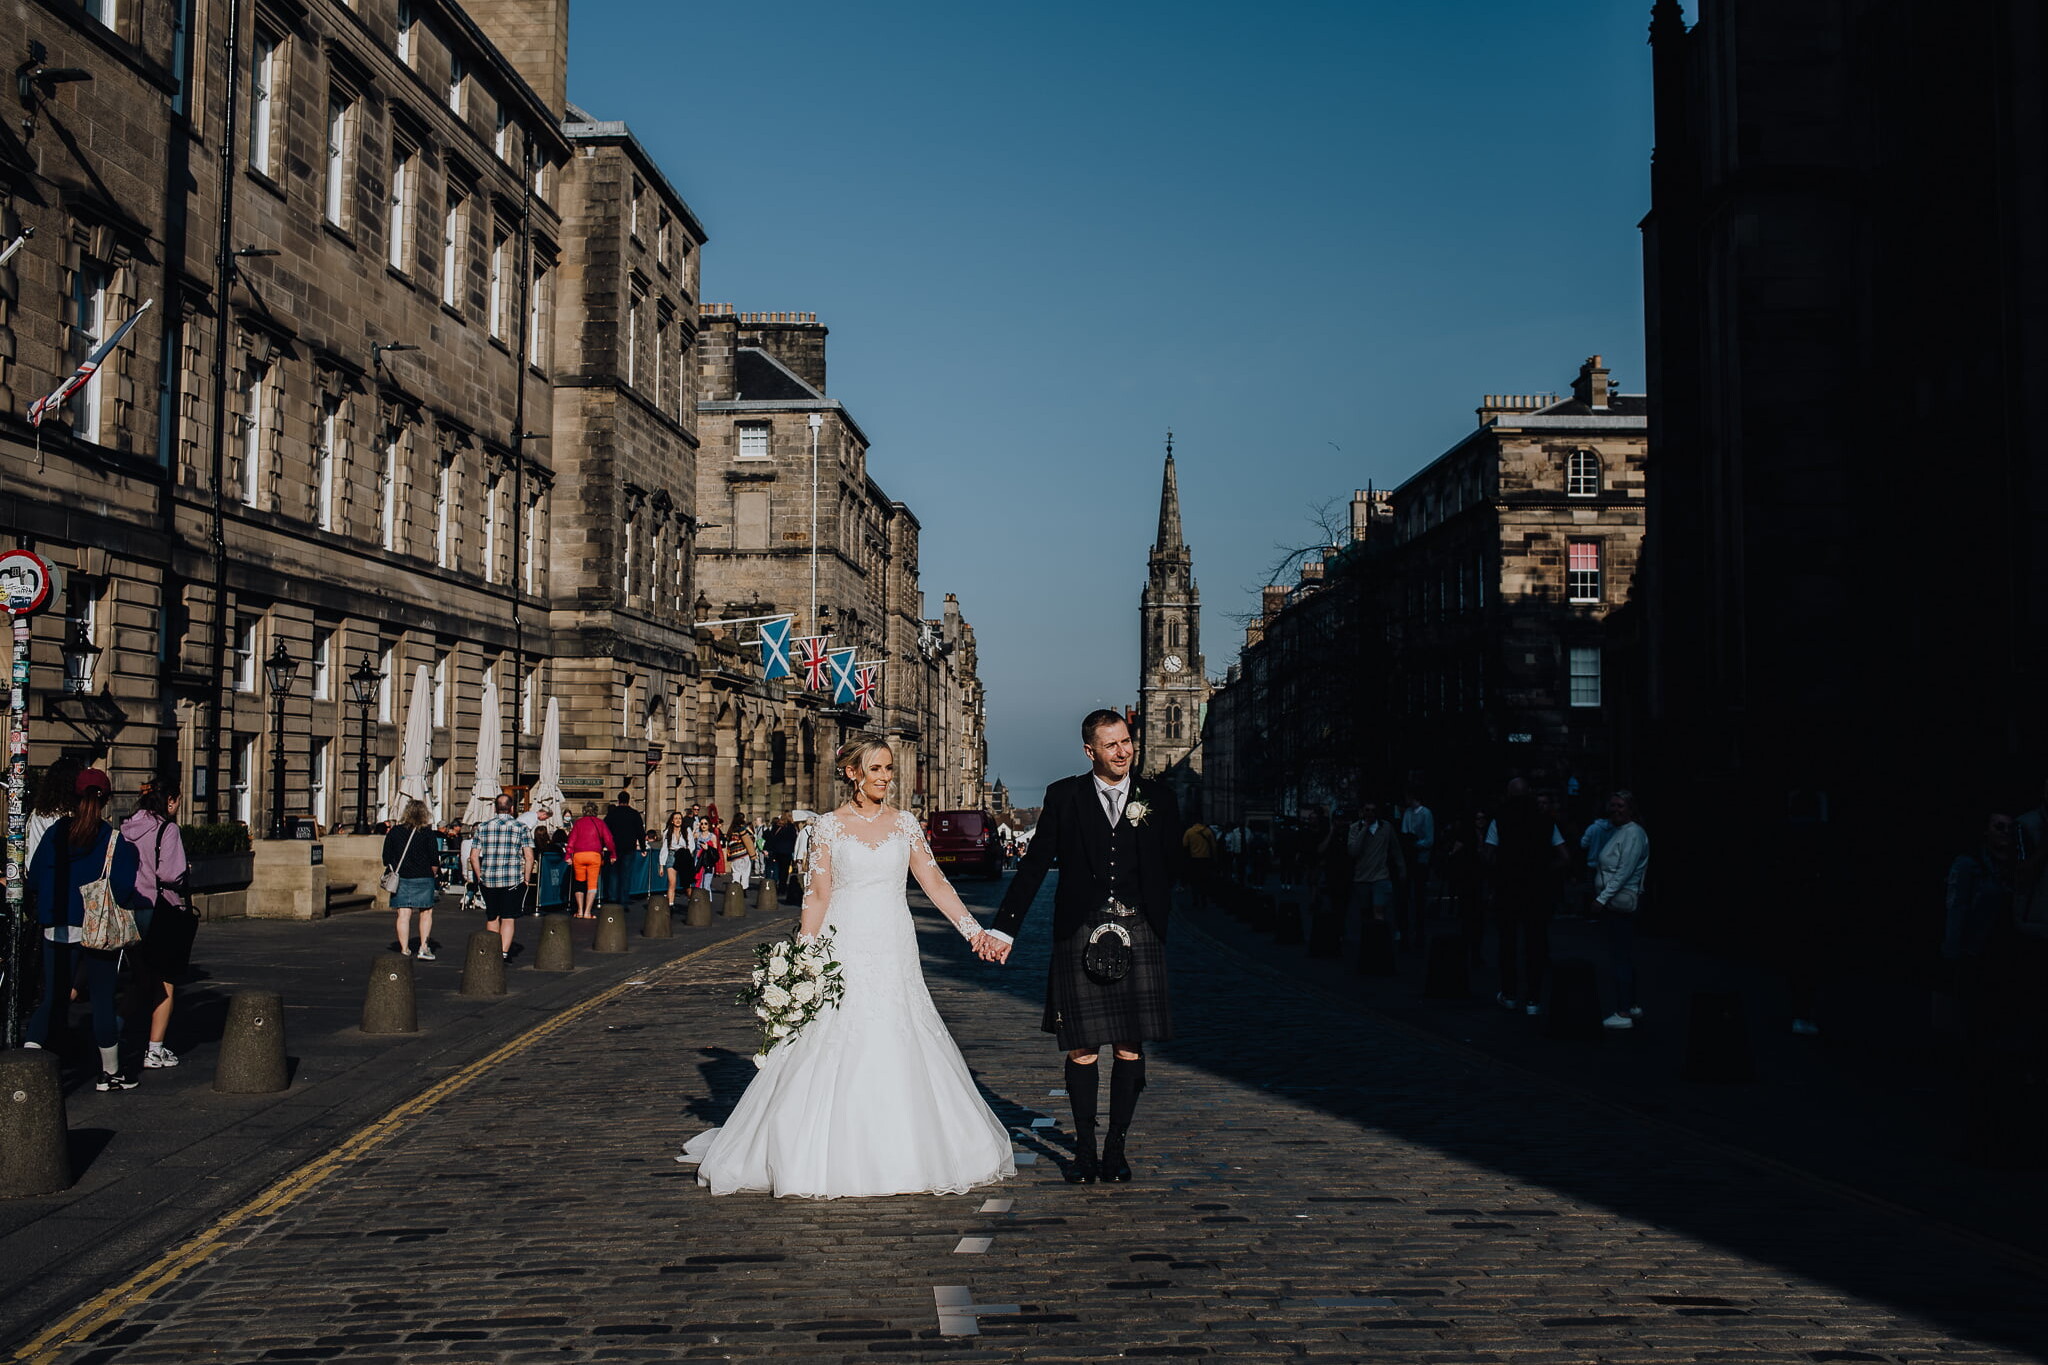 The Beautifully Sunny Edinburgh City Chambers Wedding of Alison and David - Part 2! 1